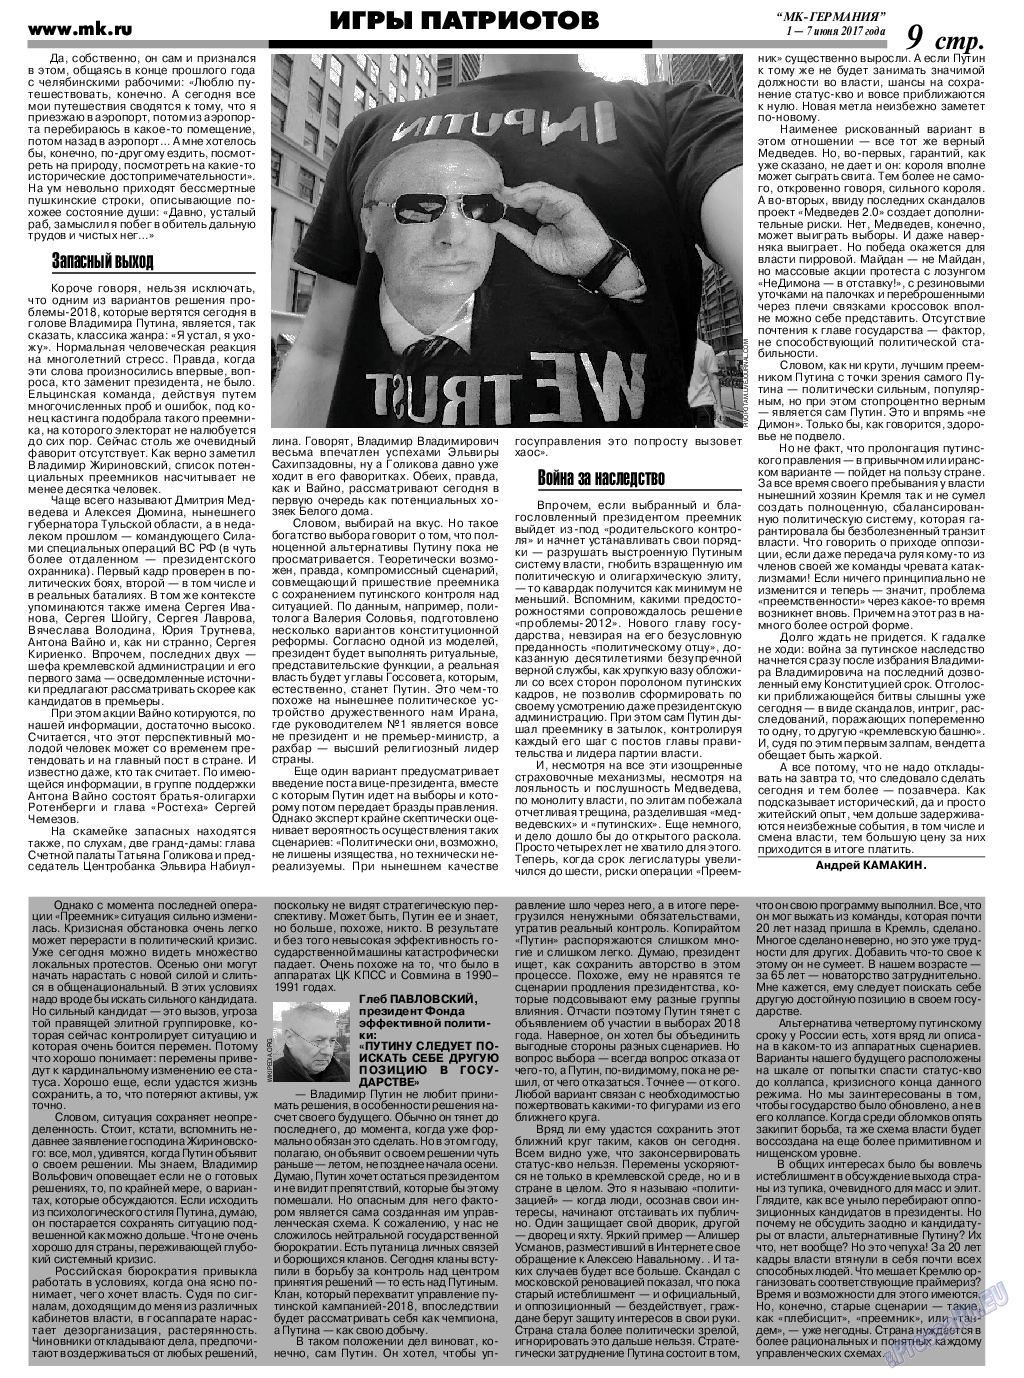 МК-Германия, газета. 2017 №23 стр.9